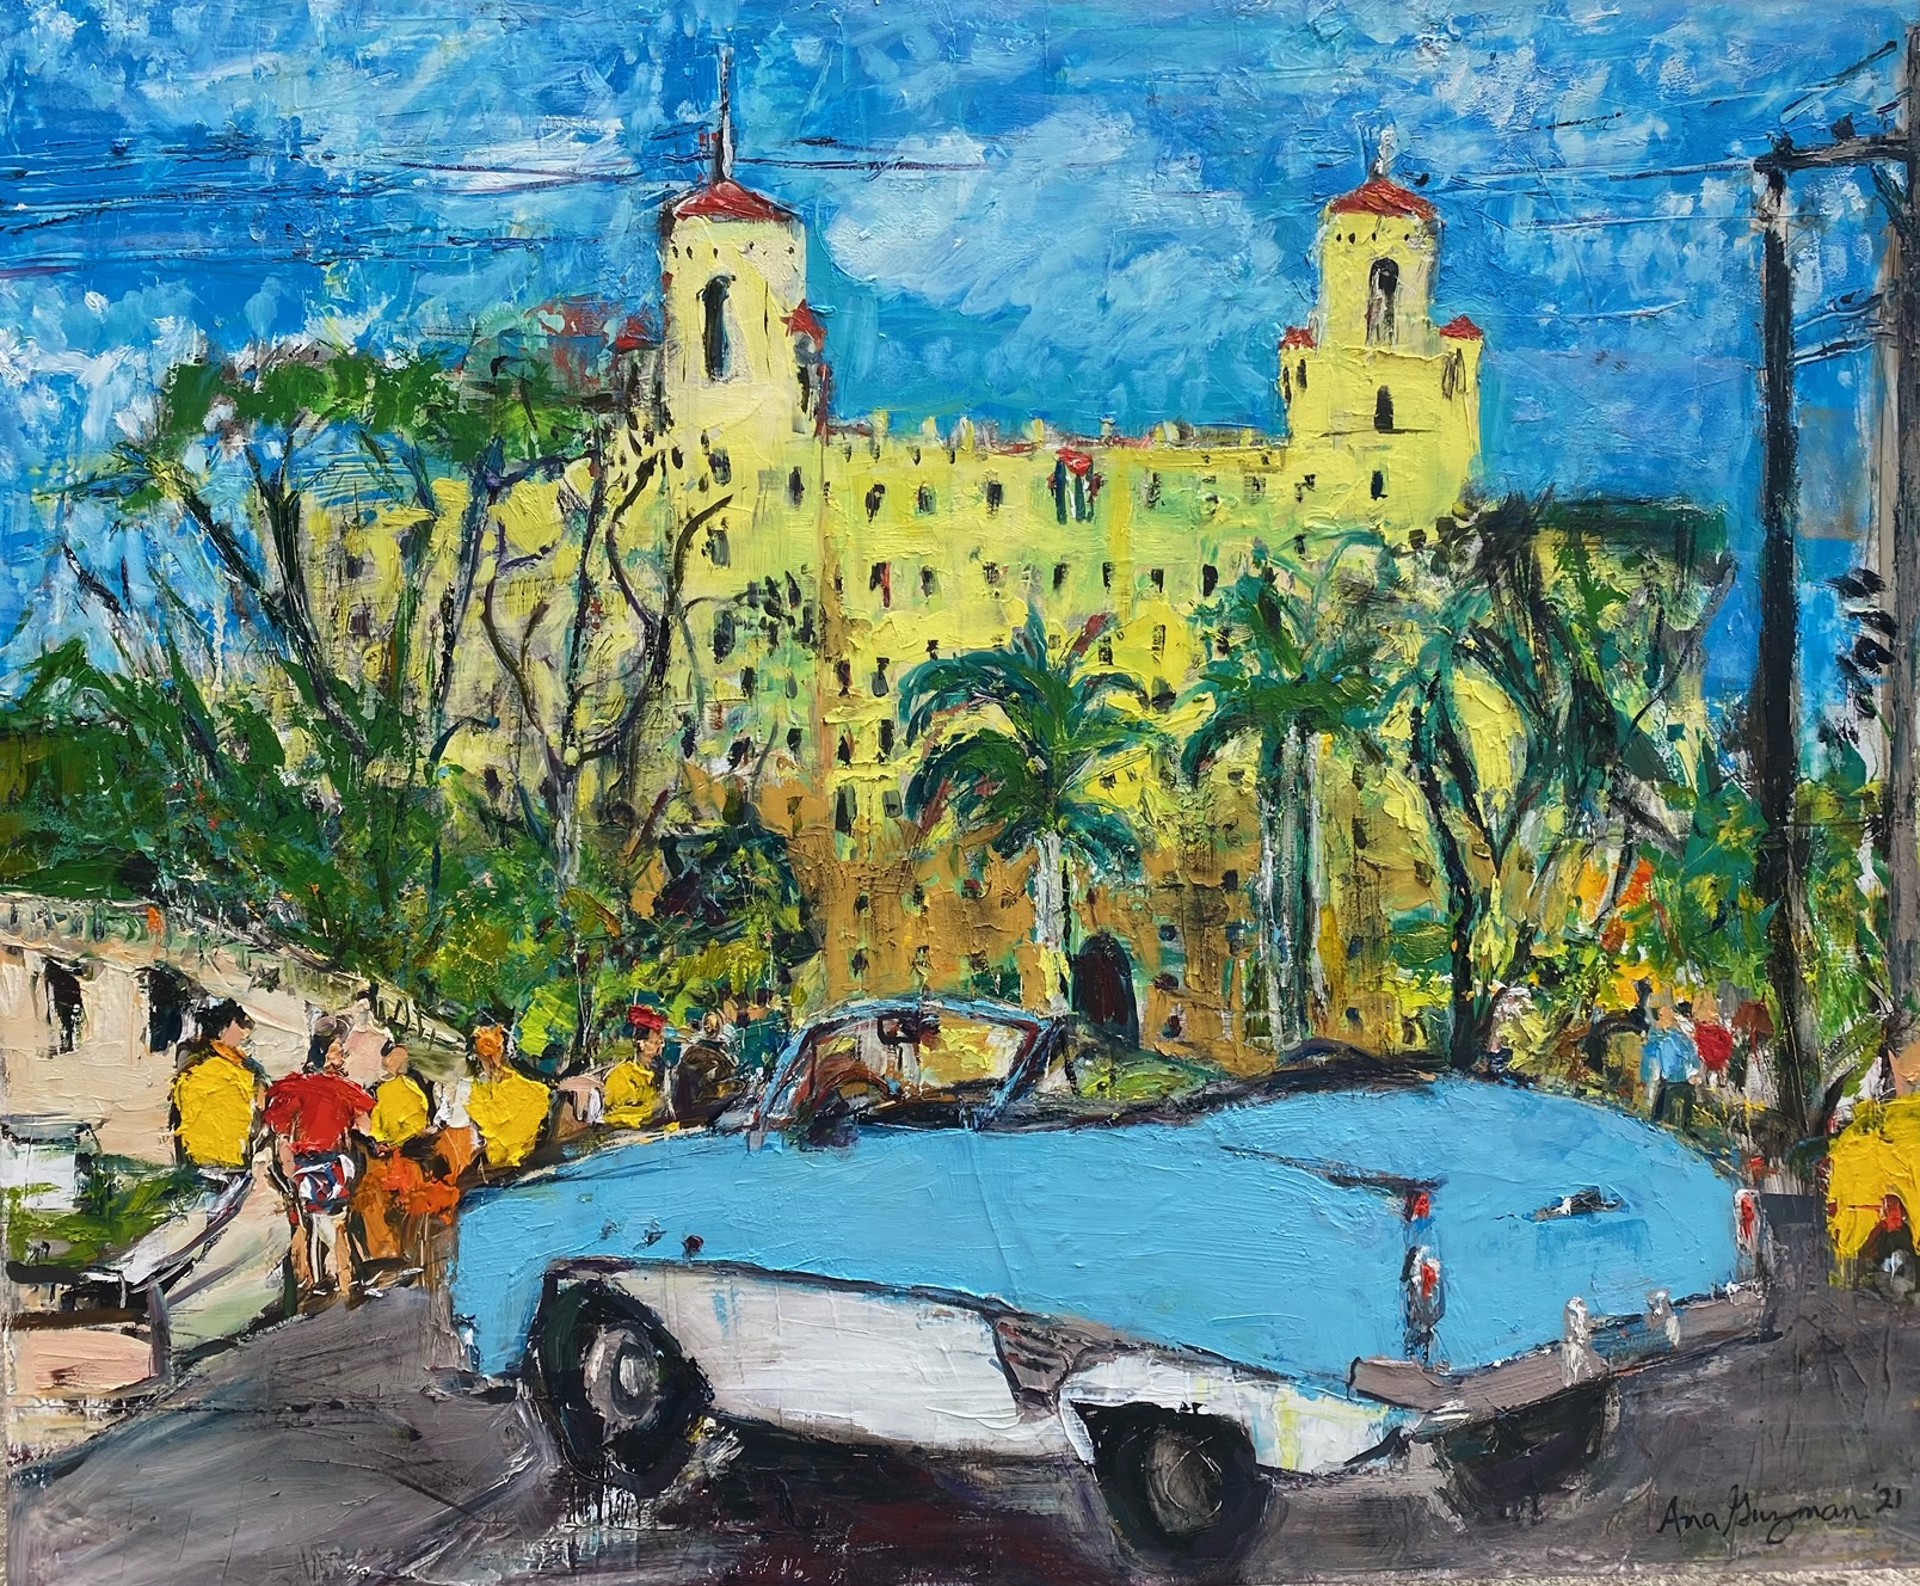 La Vida Cuba - Convertible Azul by Ana Guzman